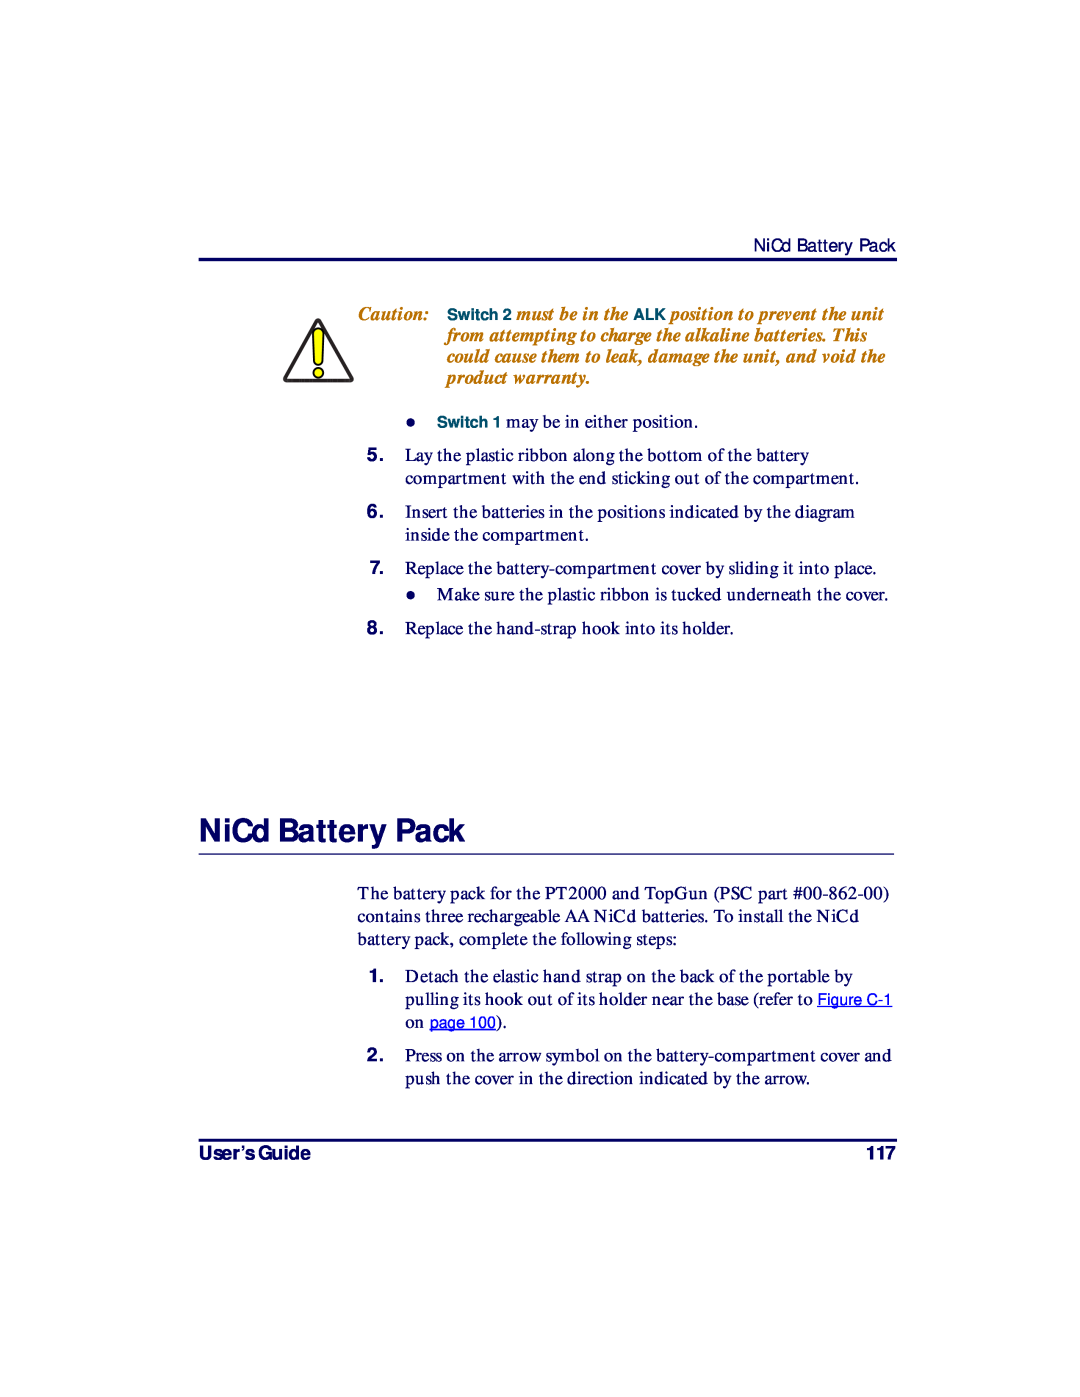 PSC PT2000, TopGun manual NiCd Battery Pack, User’s Guide 